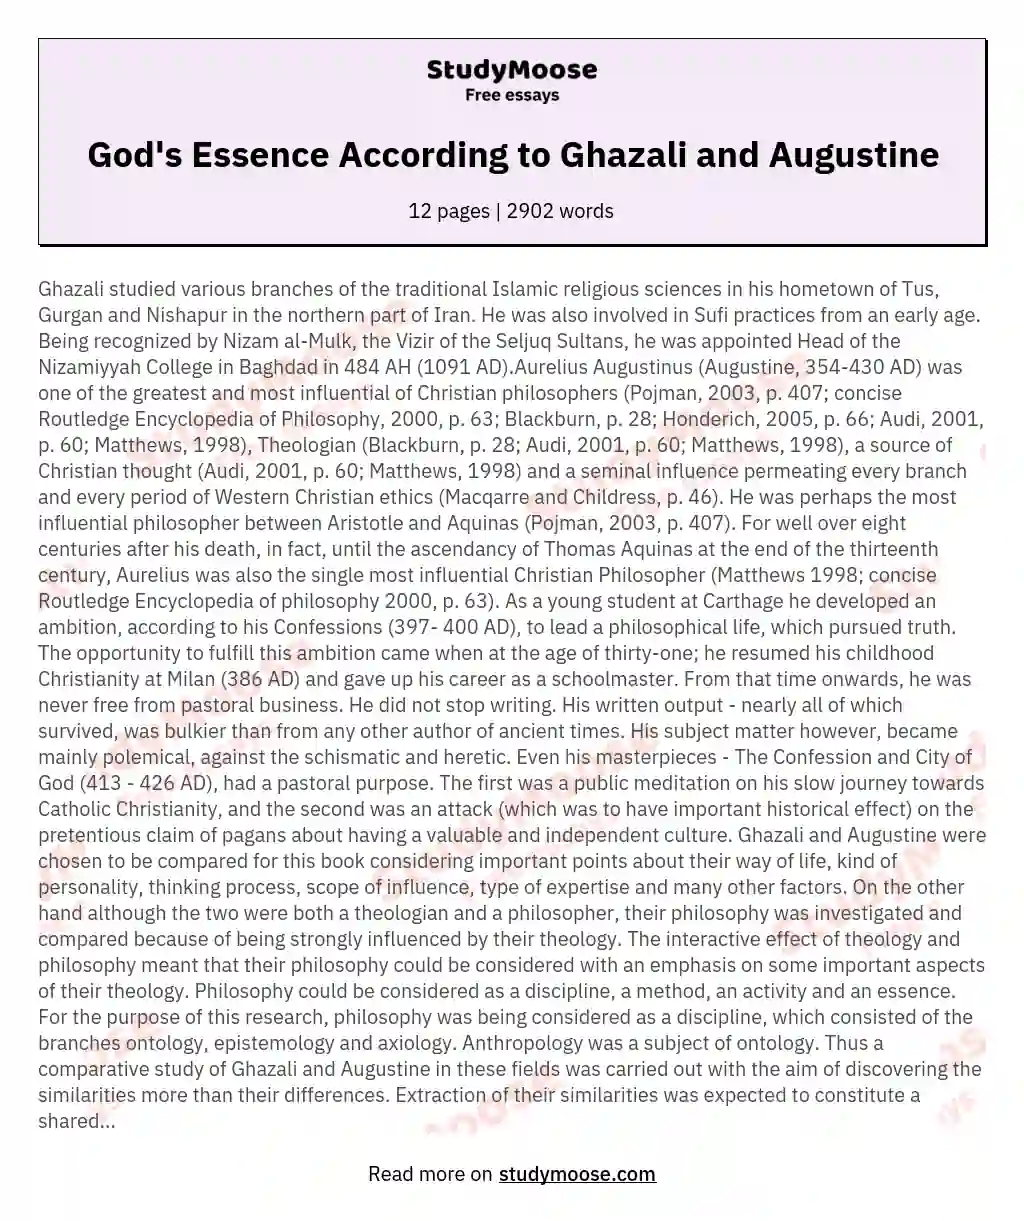 God's Essence According to Ghazali and Augustine